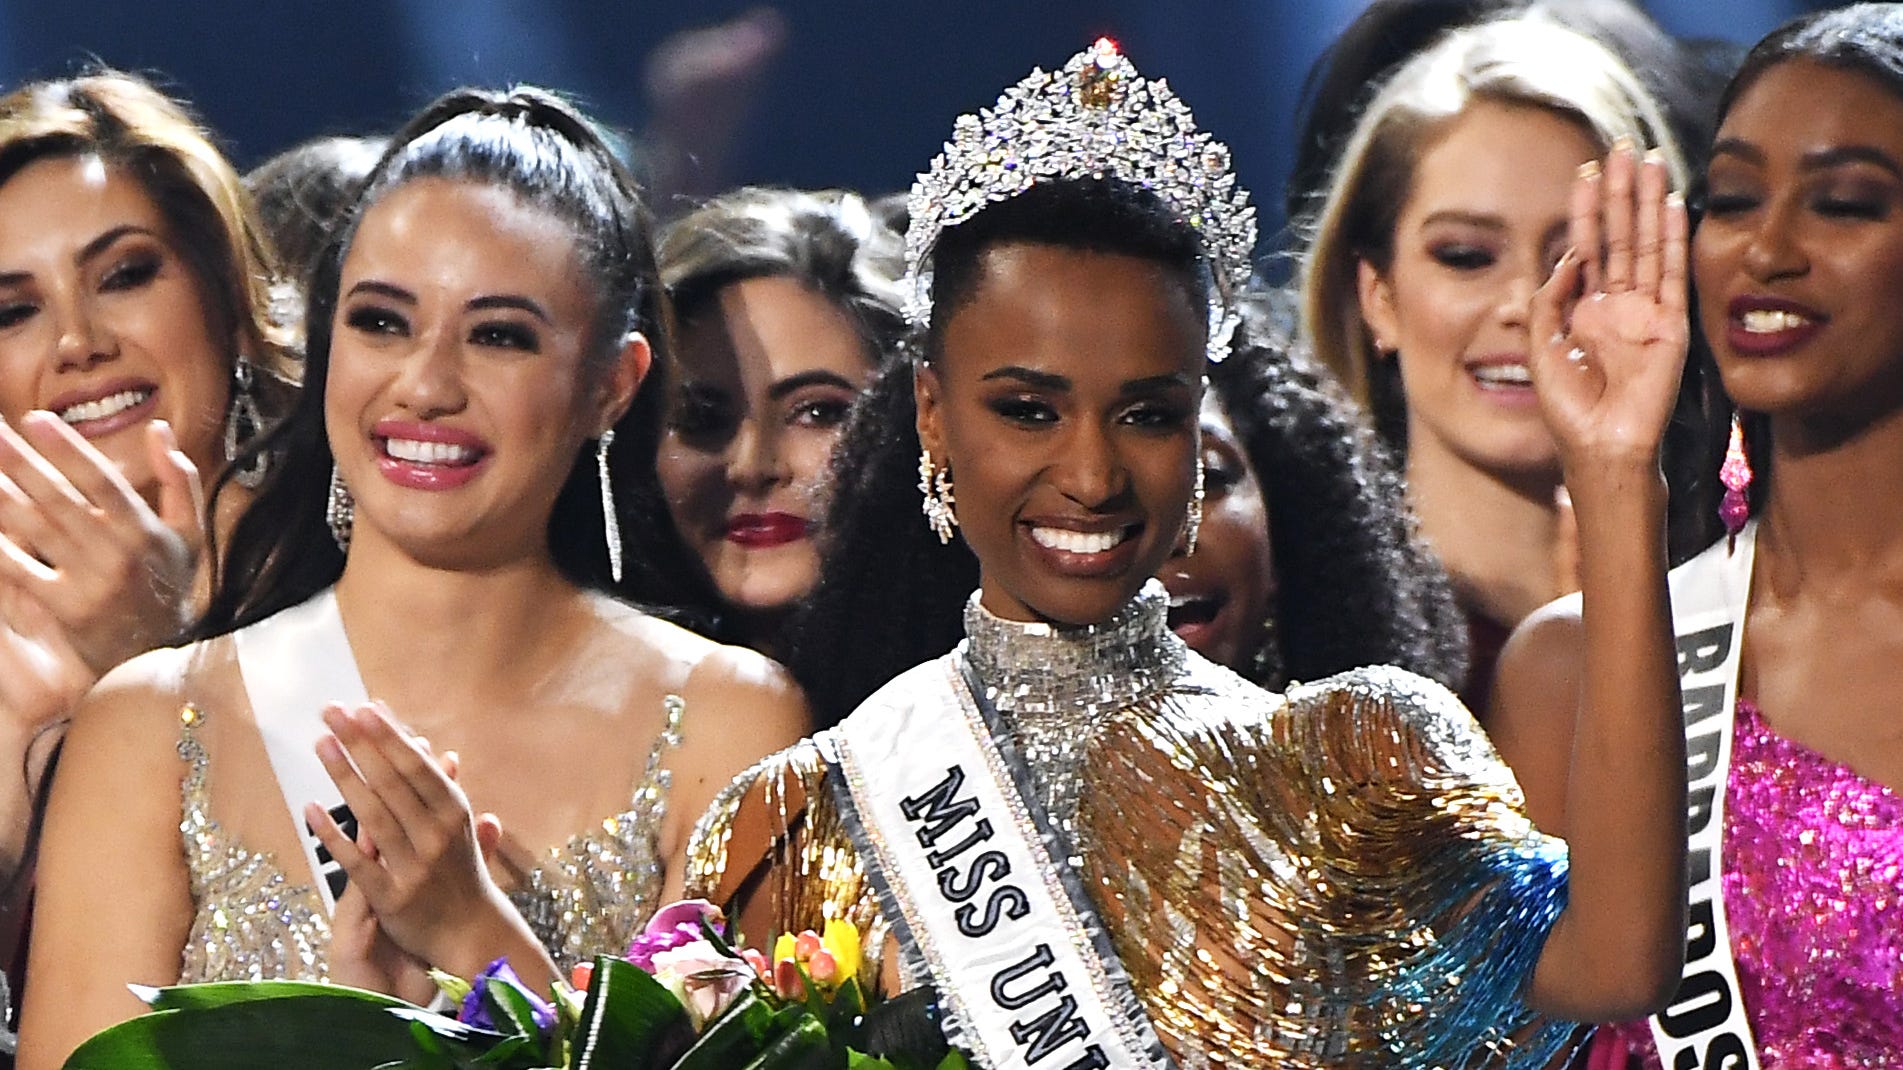 Miss Universe 2019 winner is South Africa; Steve Harvey makes mistake